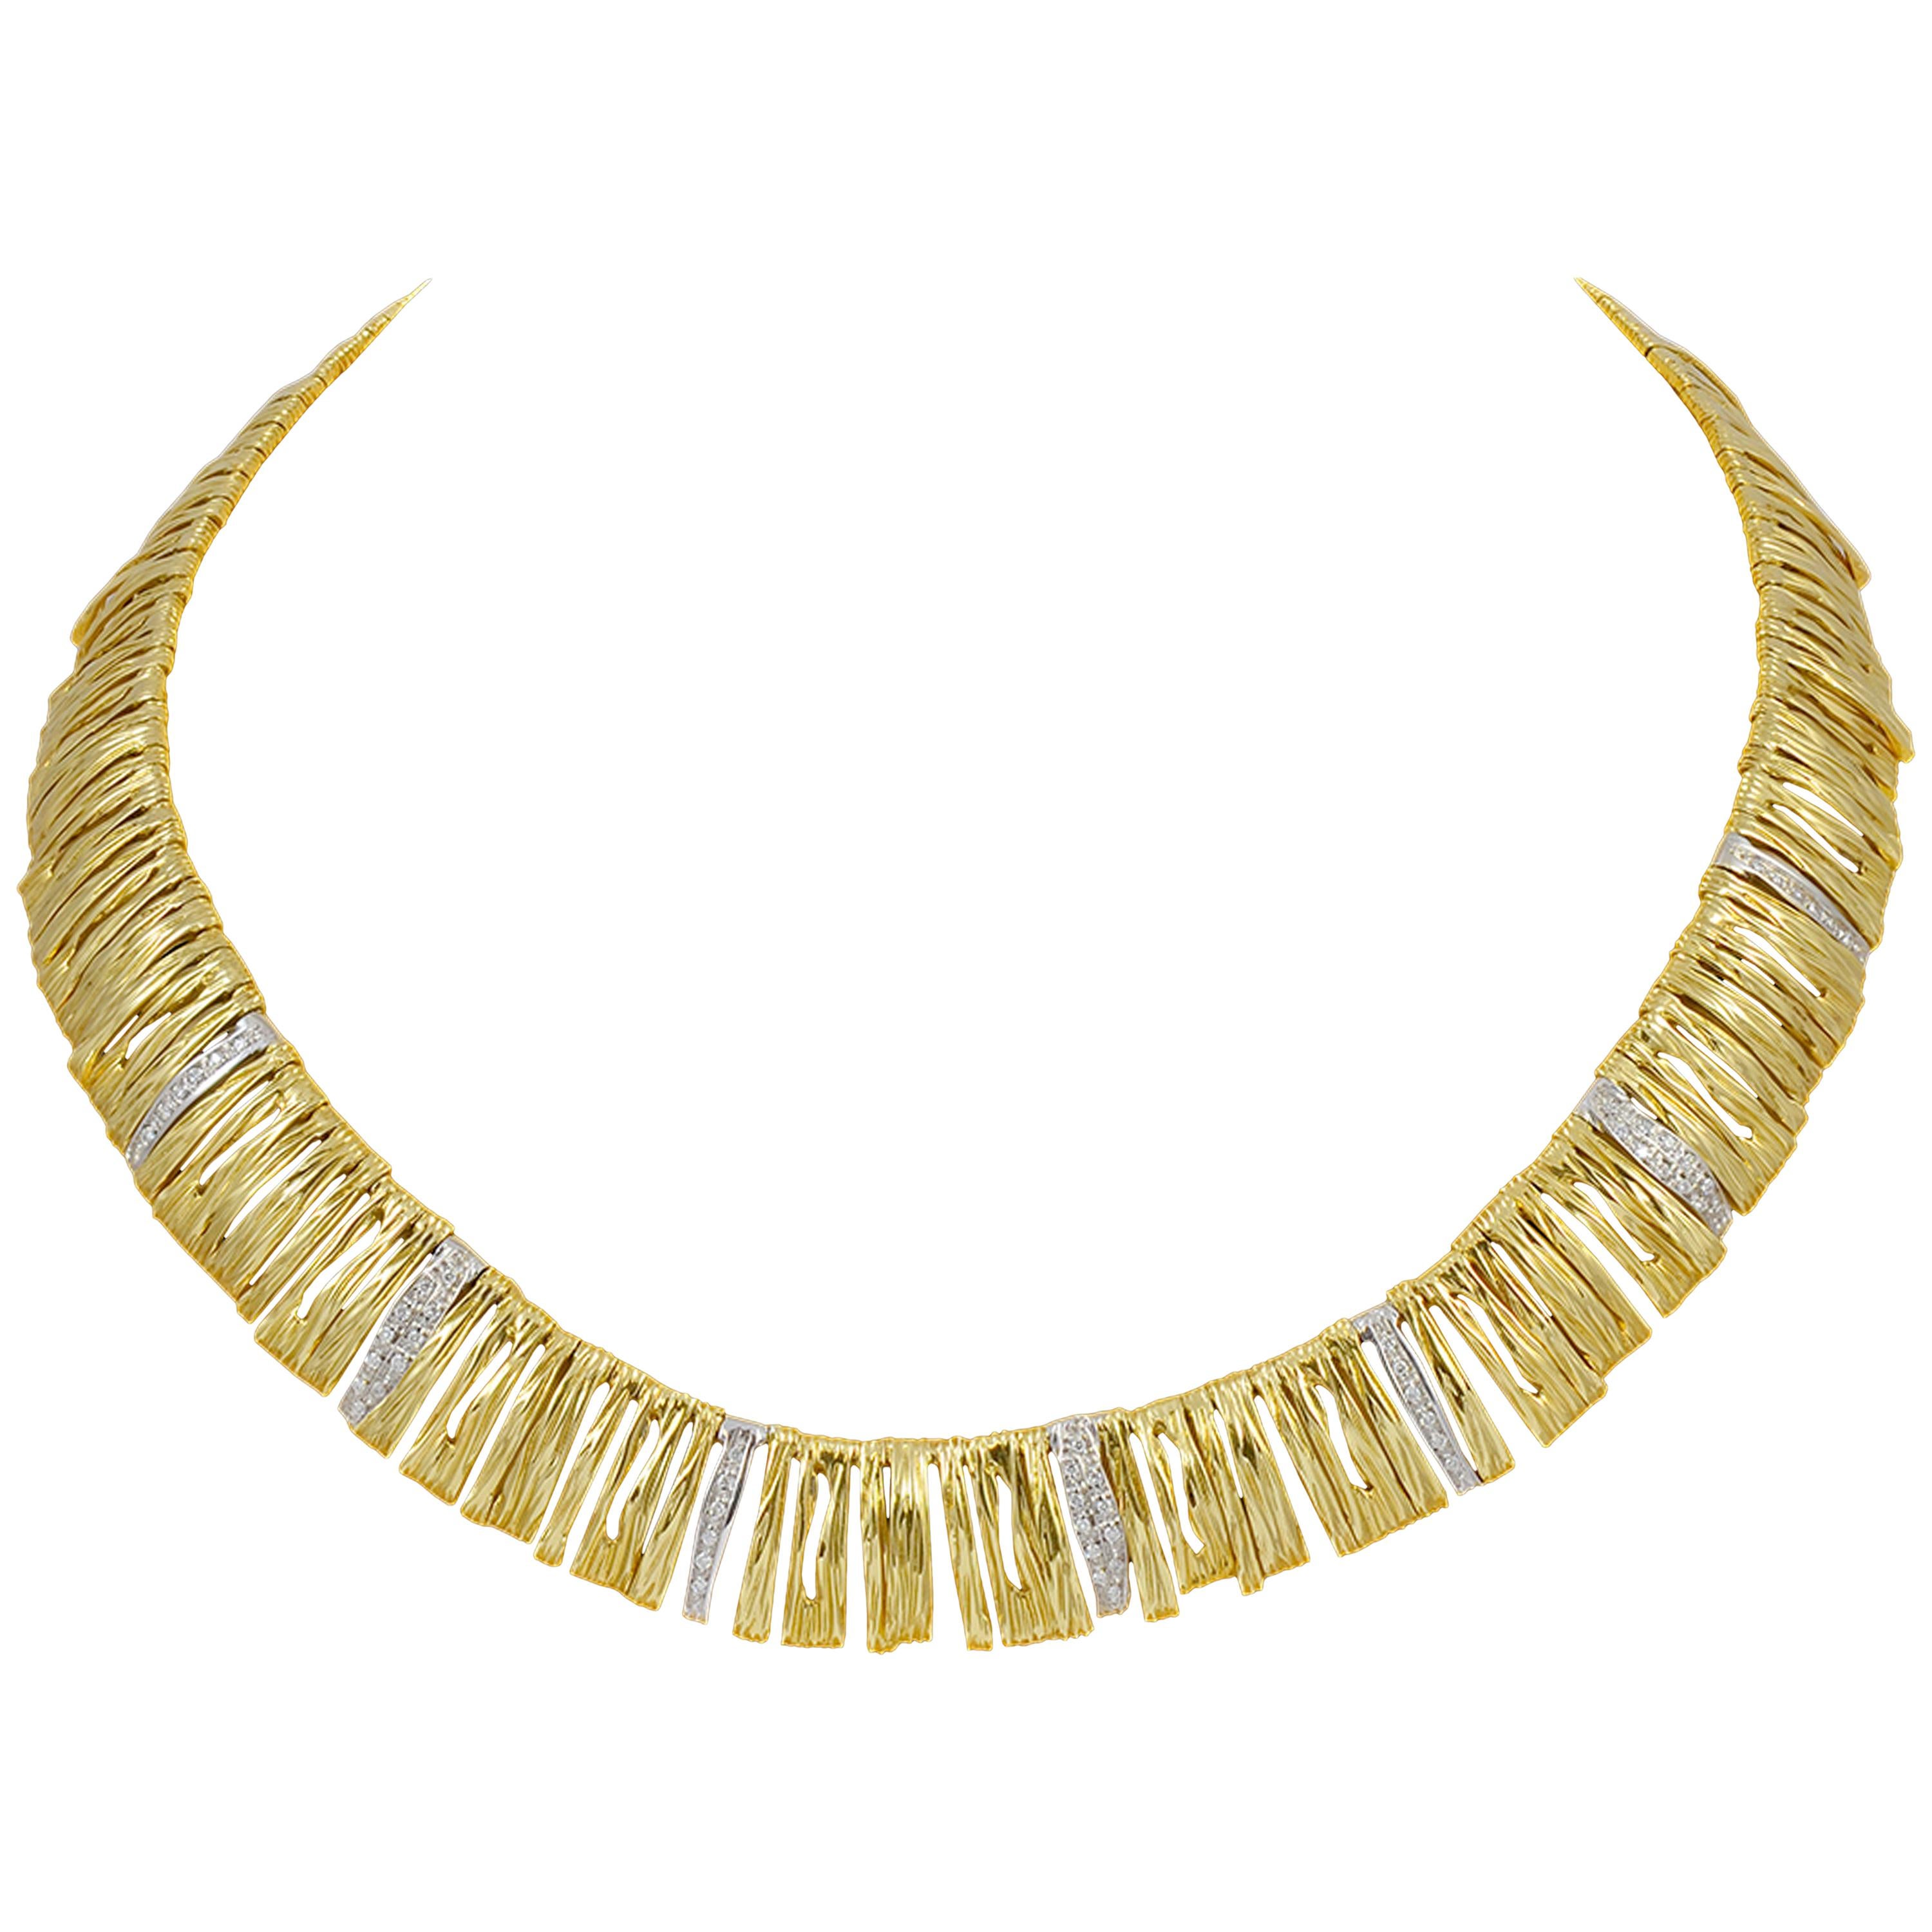 Designer Roberto Coin Diamond Elephant Skin Necklace, 18 Karat Gold 53 Grams